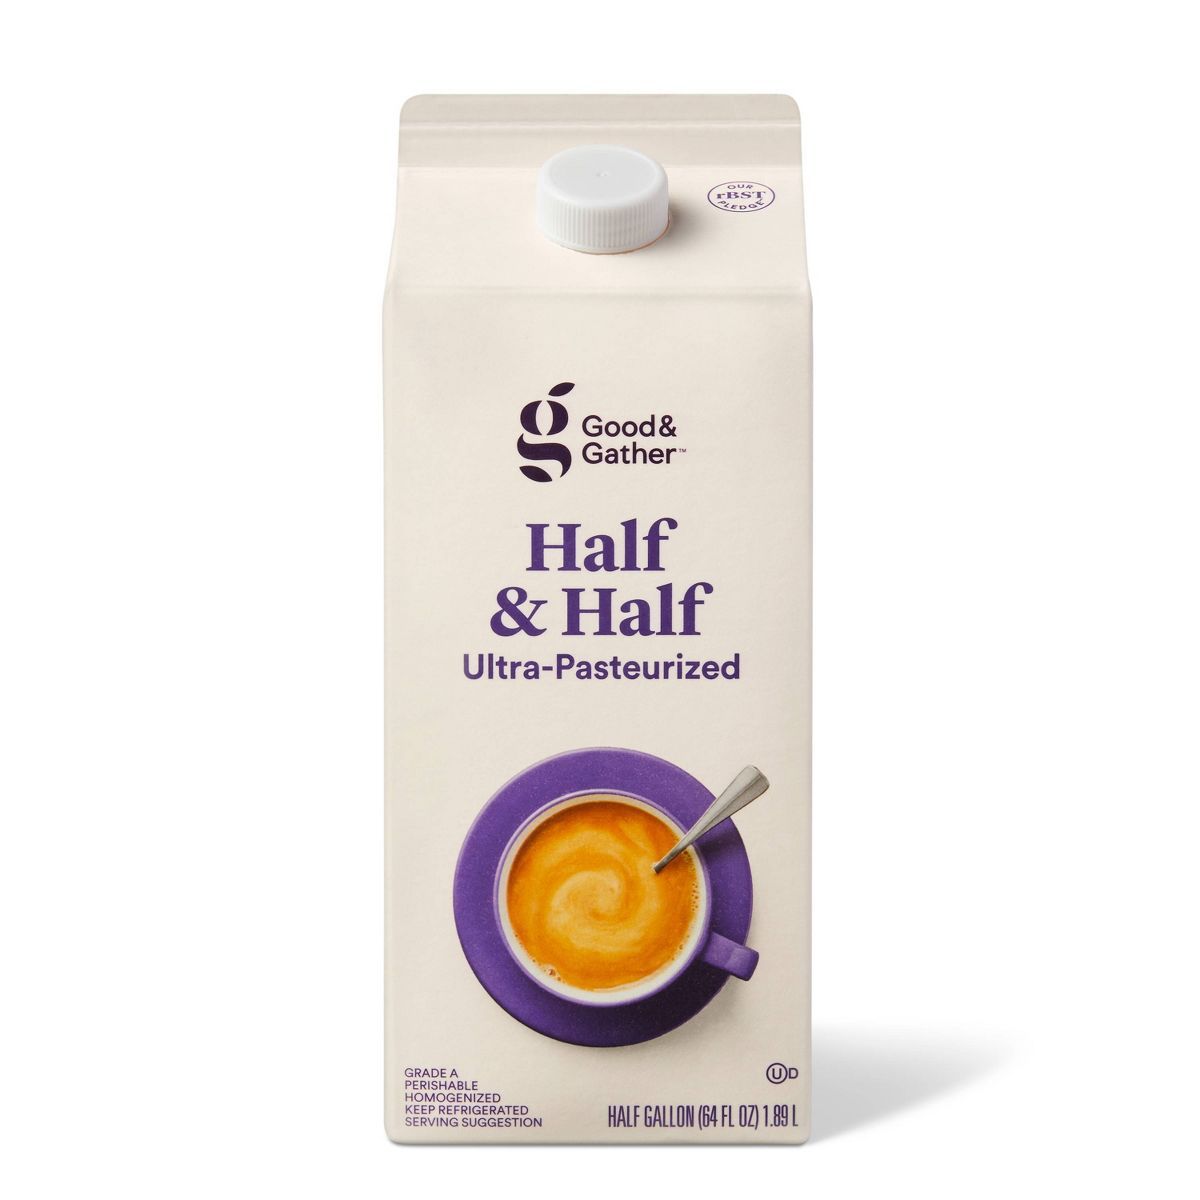 Half & Half - 0.5gal - Good & Gather™ | Target